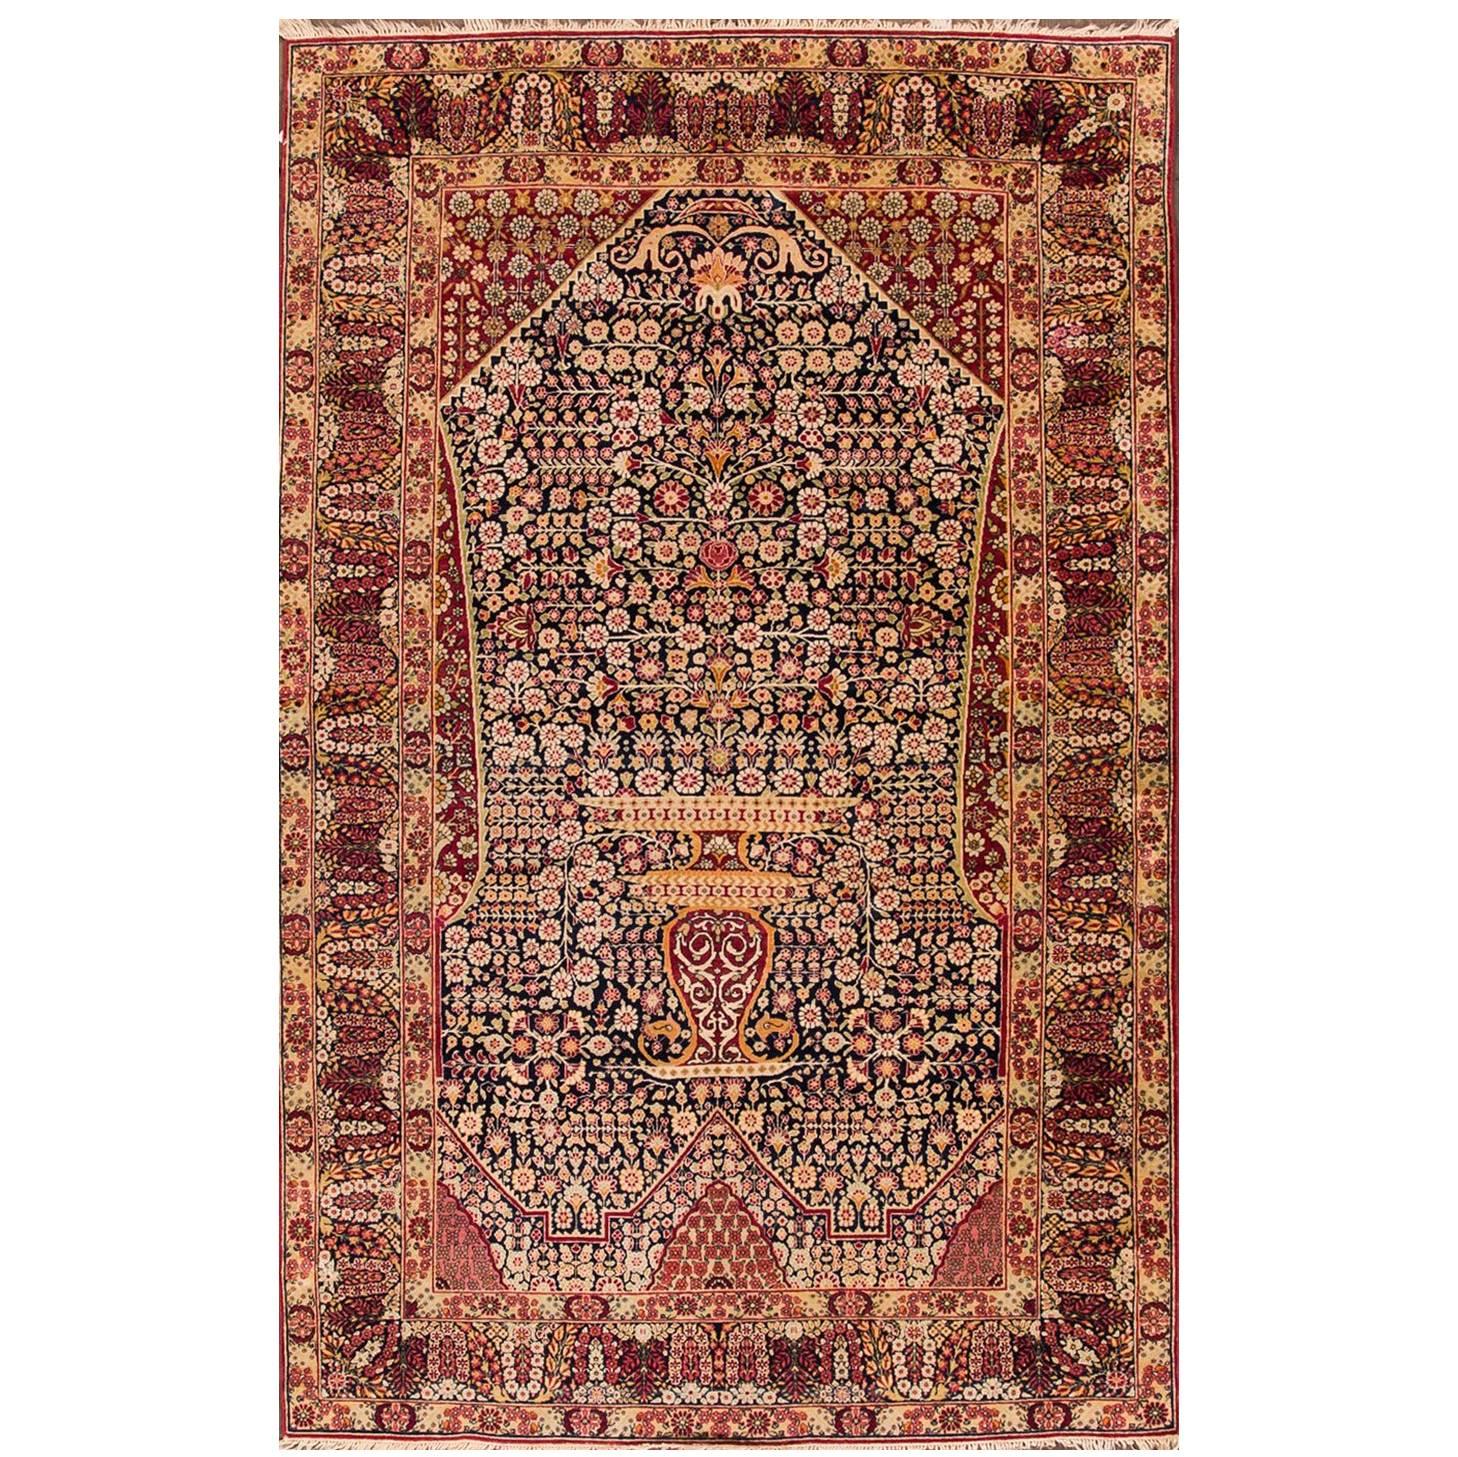 Early 20th Century Salmon/Blue Persian Kerman Carpet